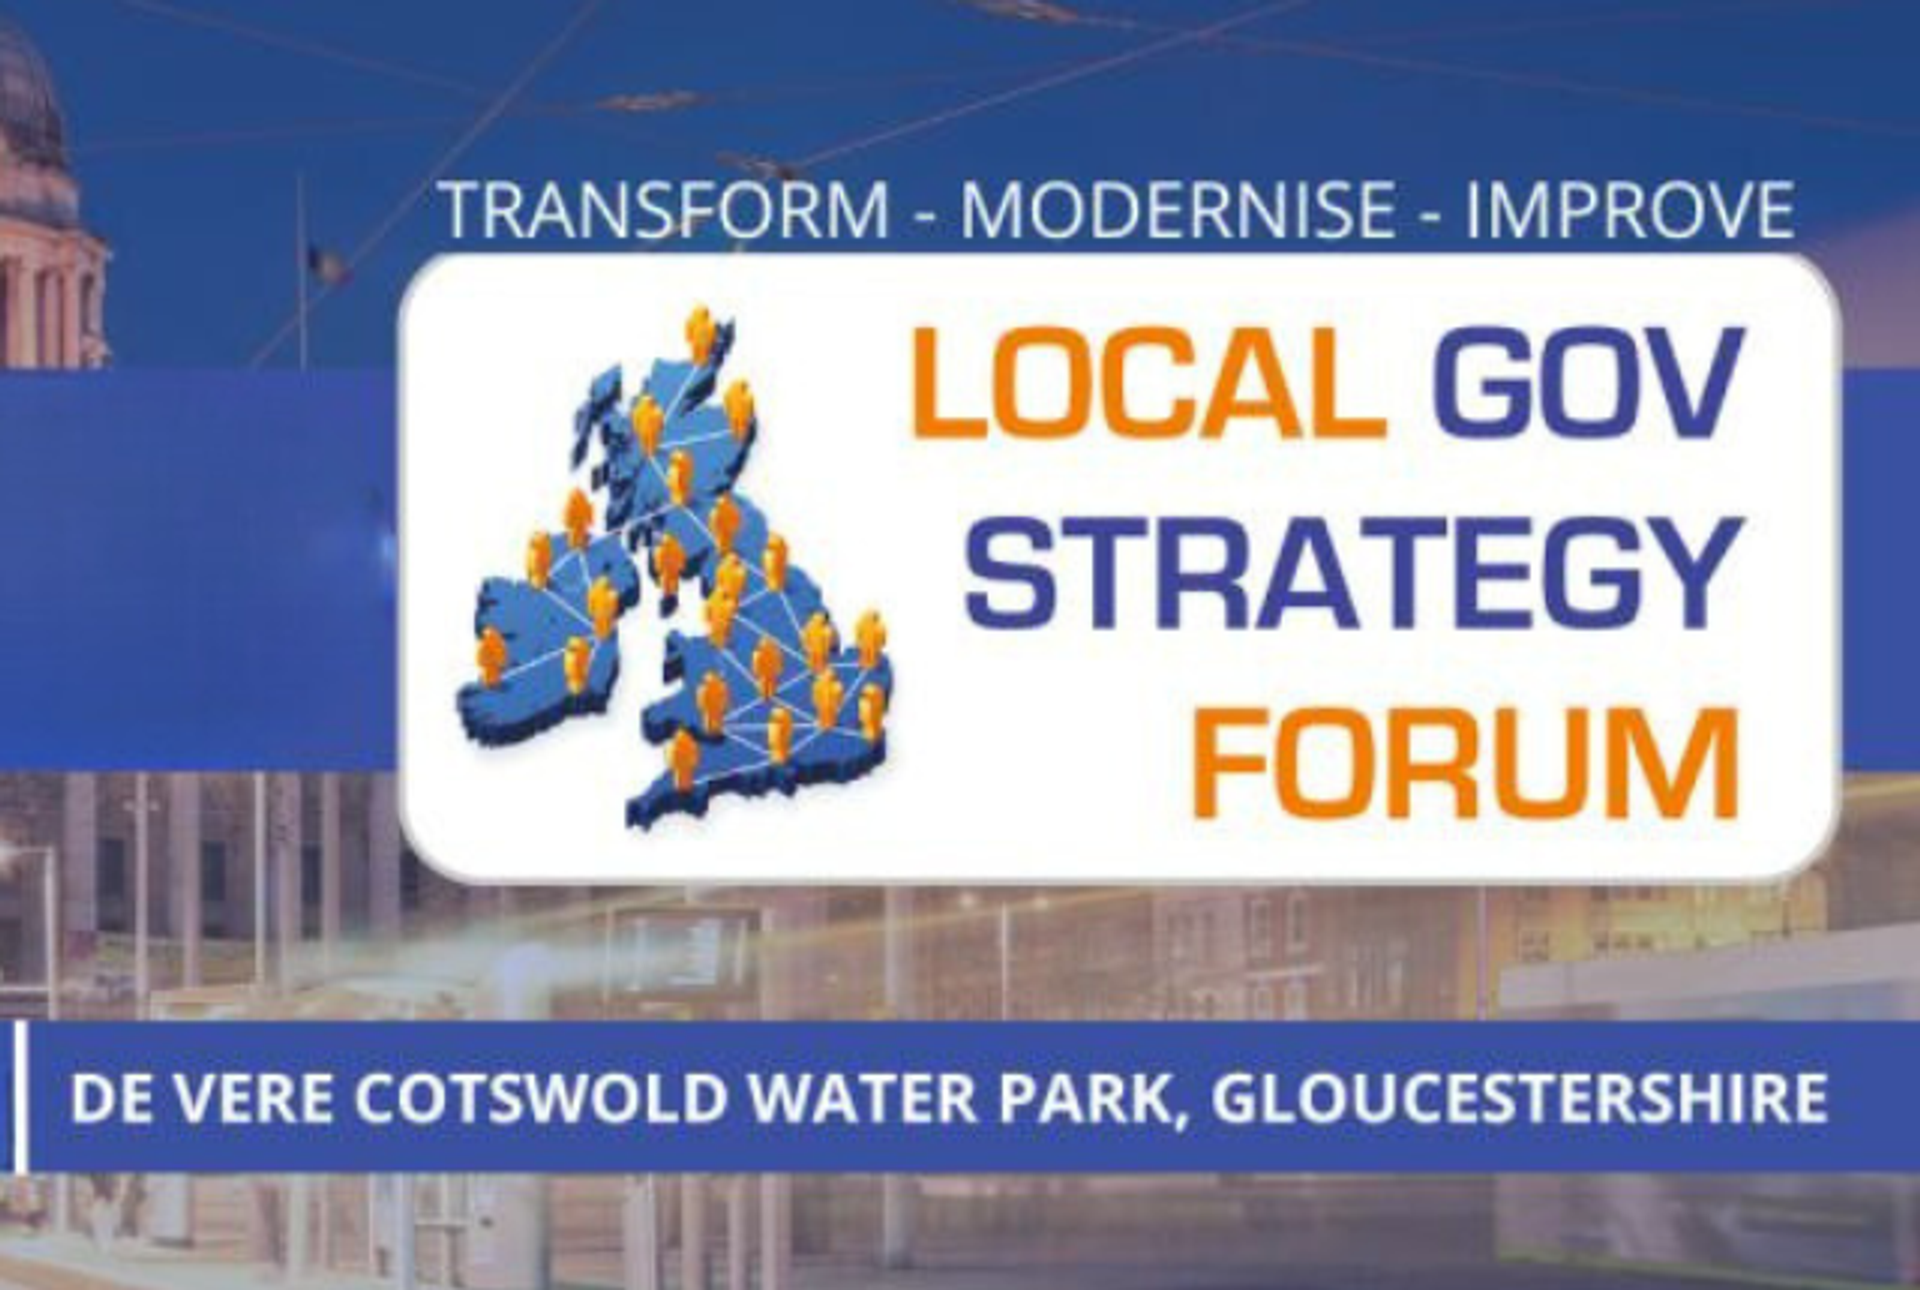 Local Gov strategy forum